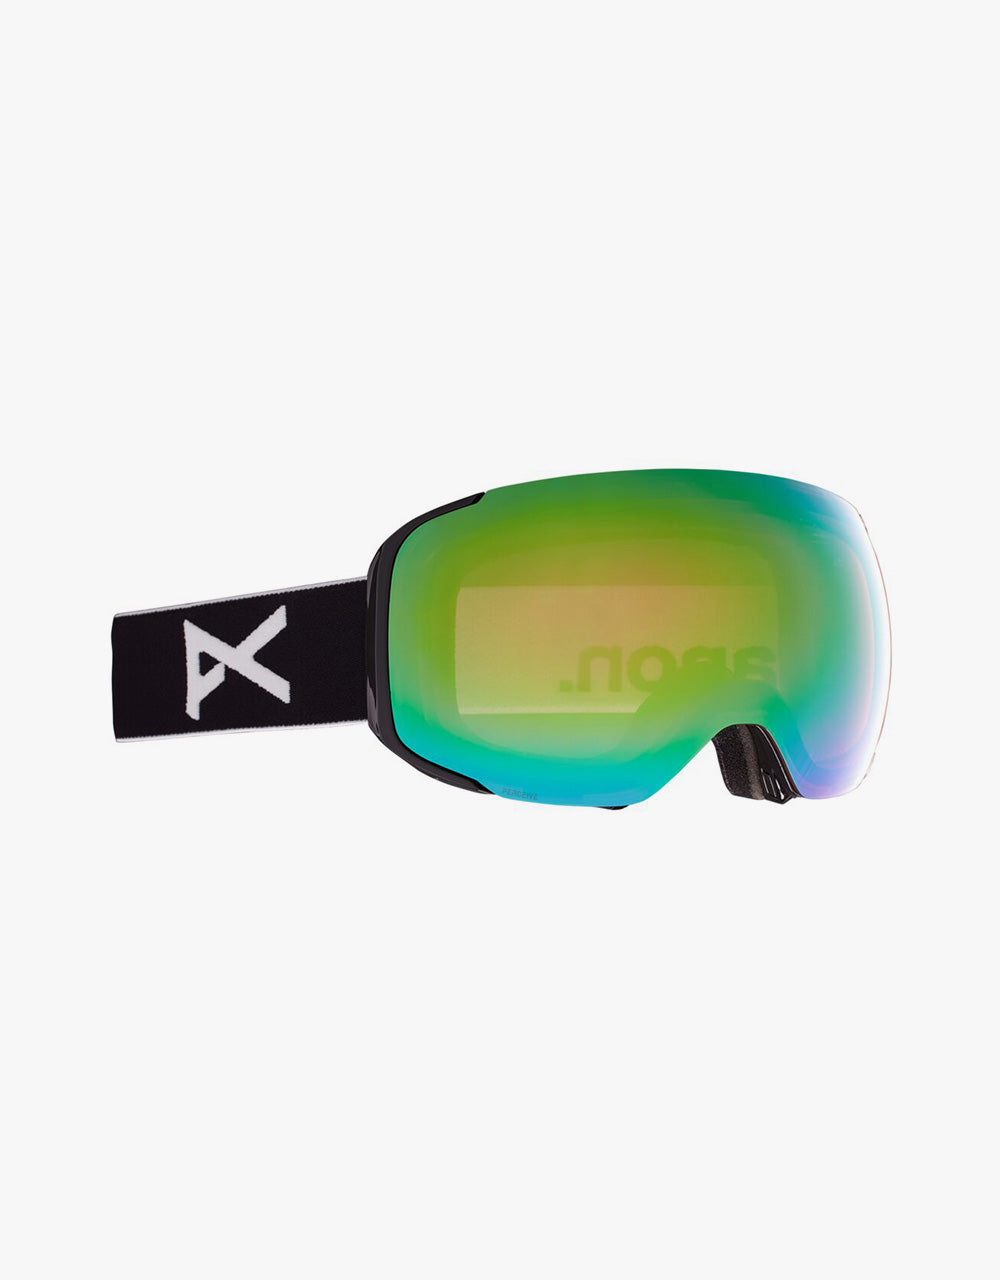 Anon M2 MFI® Snowboard Goggles - Black/Perceive Variable Green